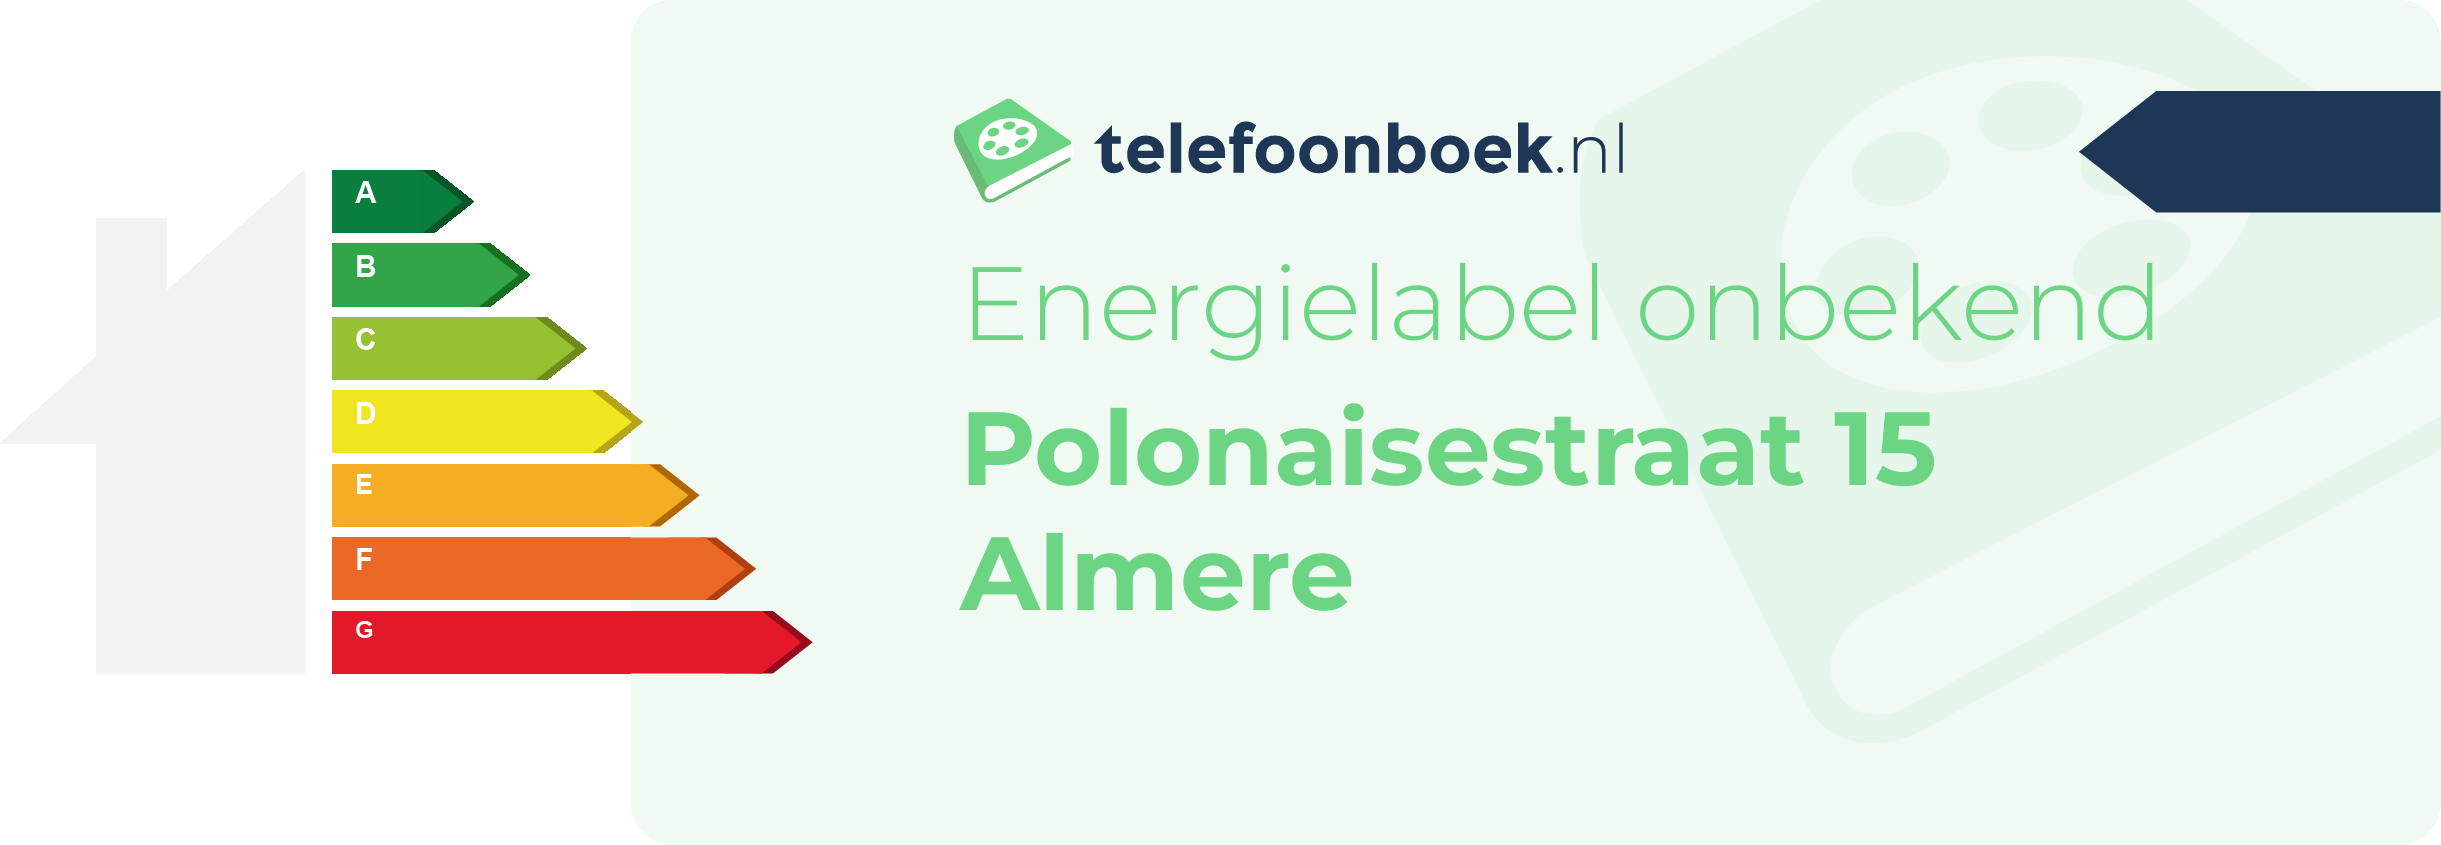 Energielabel Polonaisestraat 15 Almere